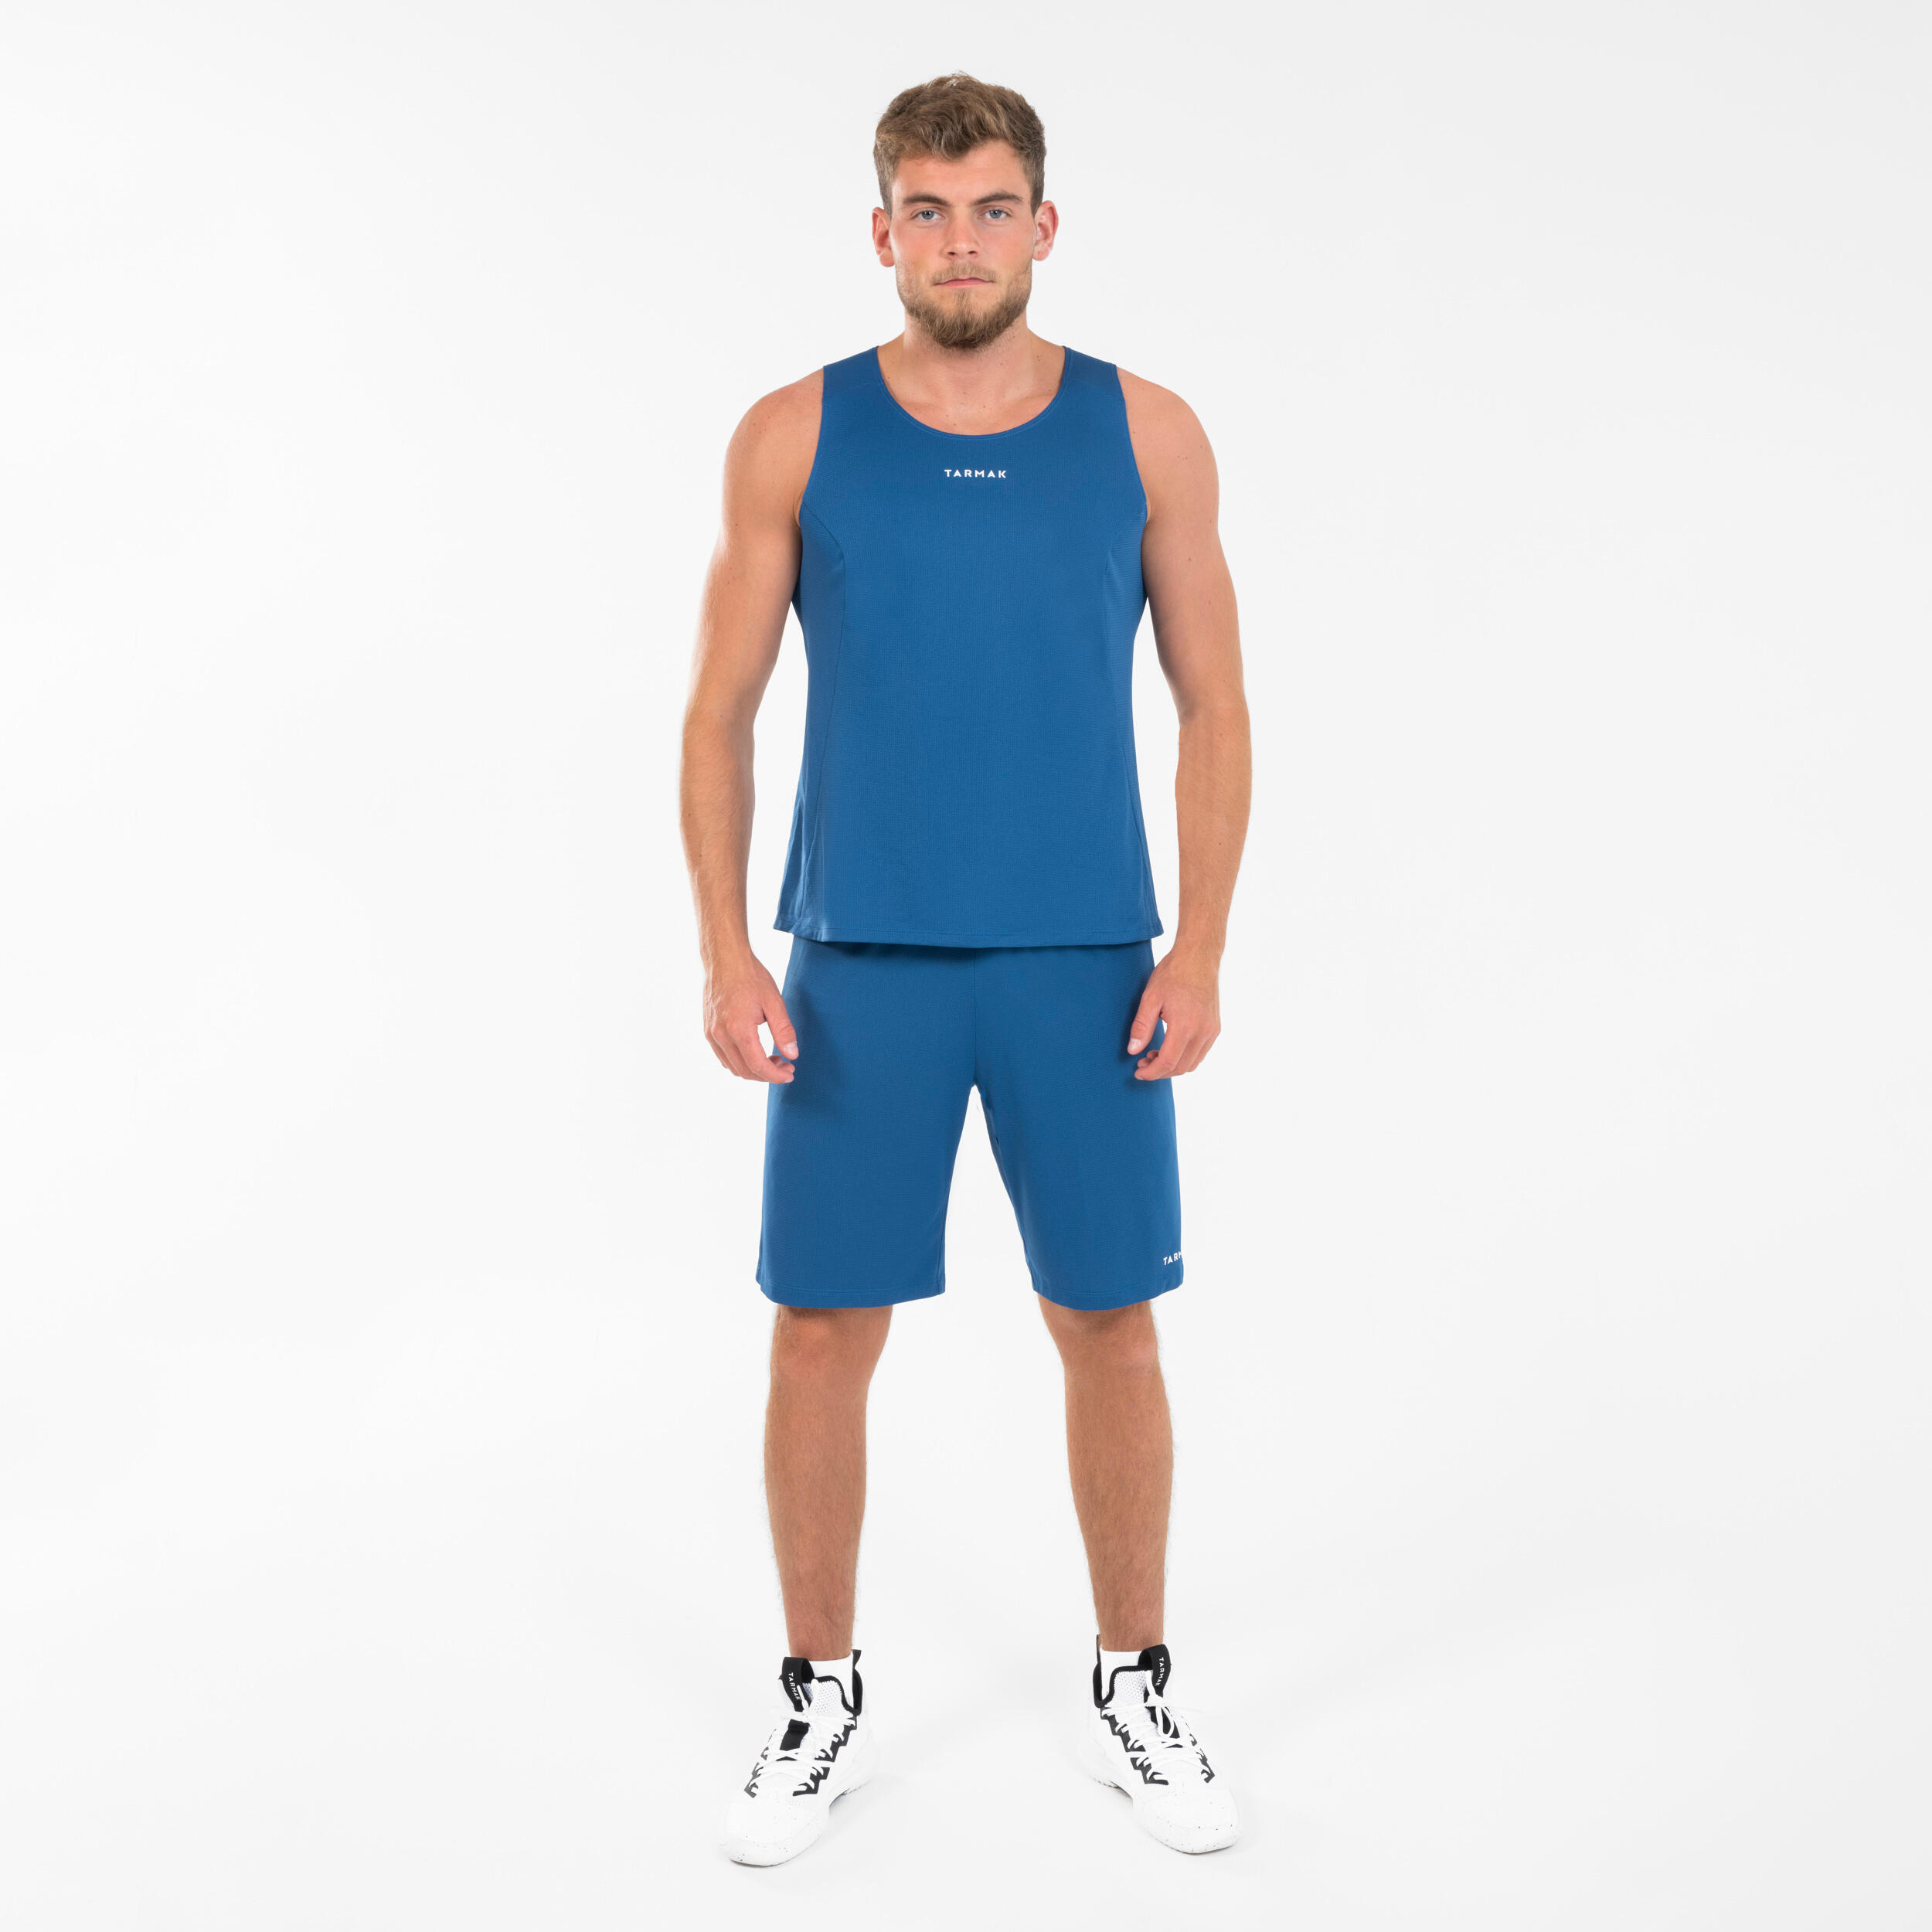 Men's Basketball Shorts - SH 100 Blue - TARMAK